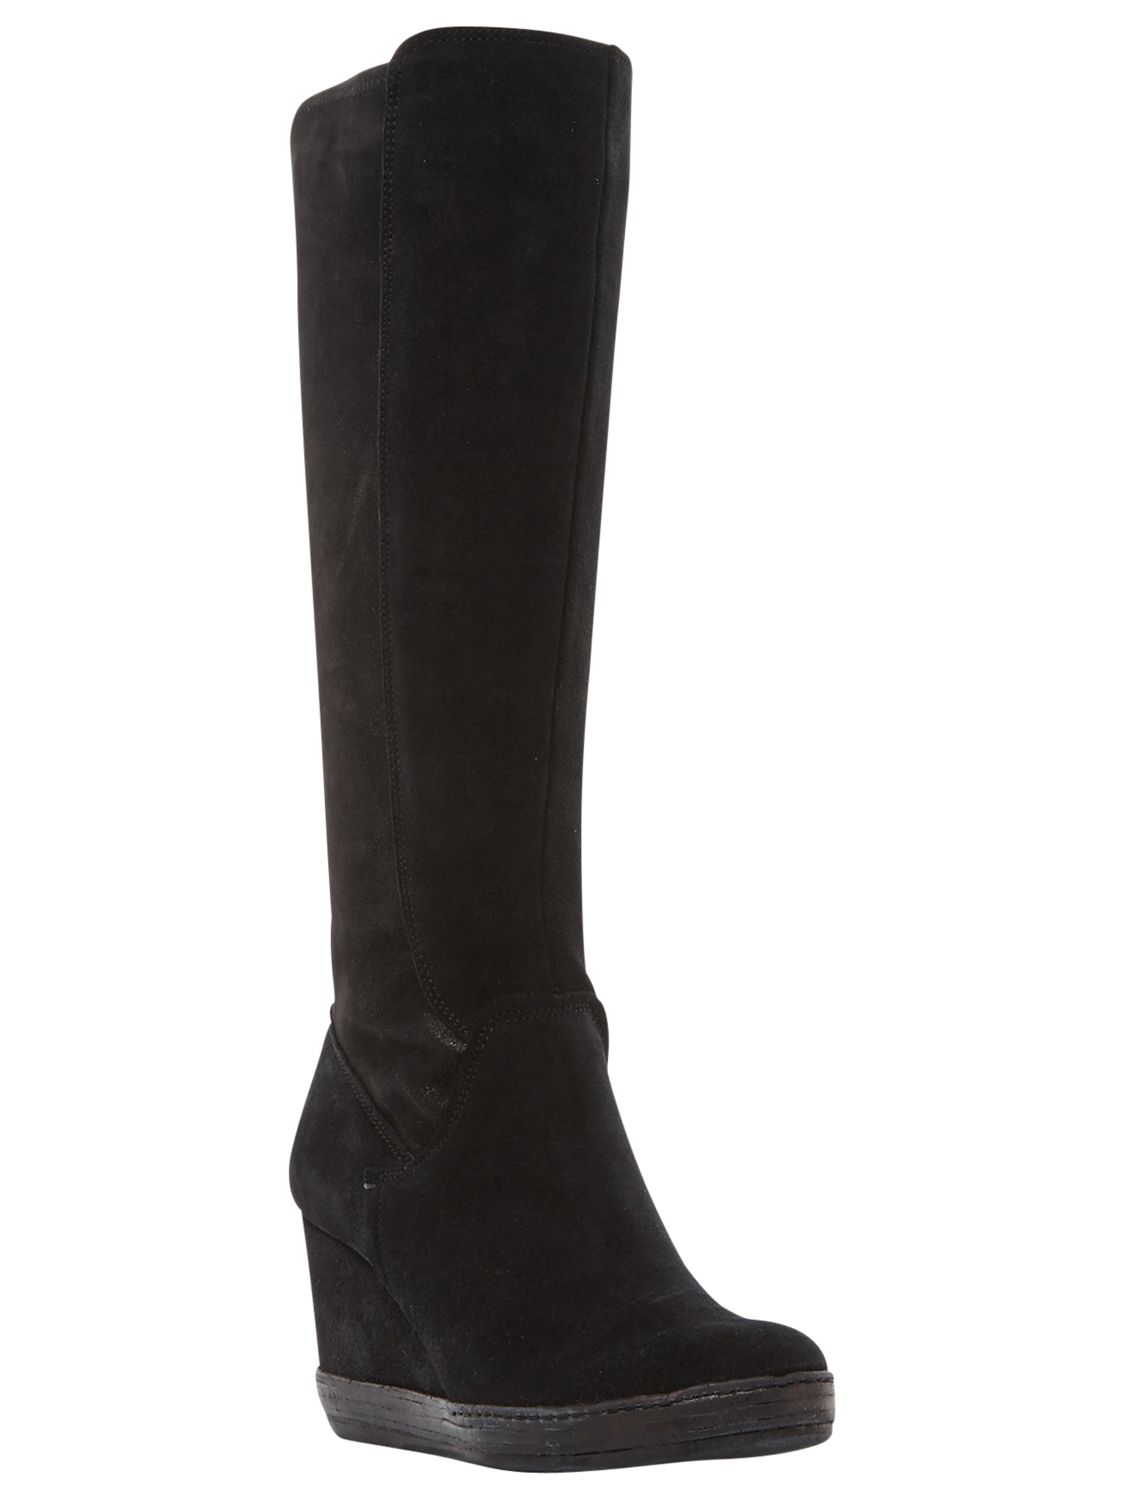 Dune Vera Wedge Heeled Knee High Boots, Black, 3